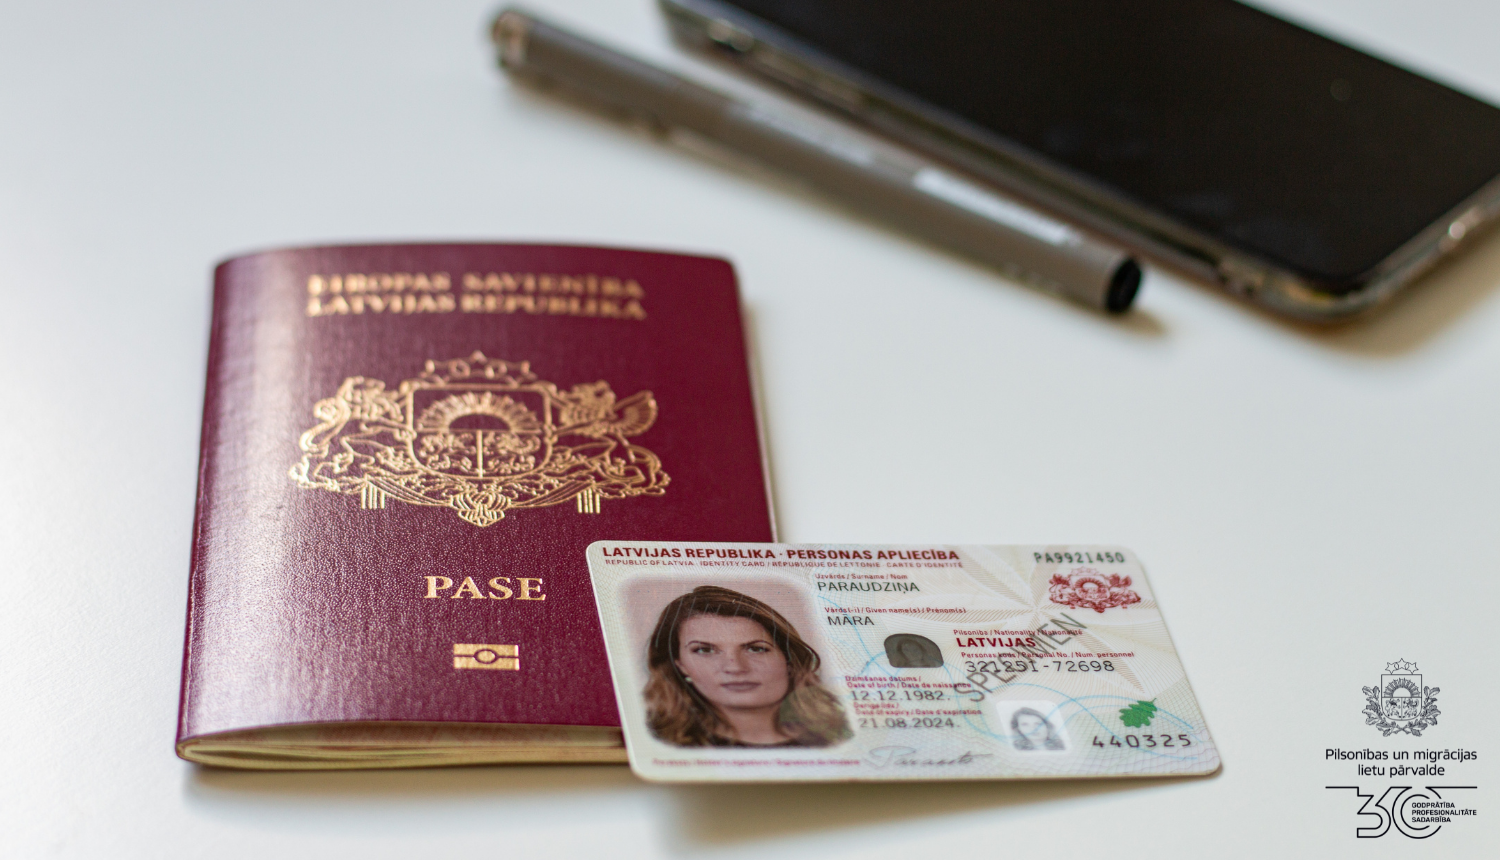 Uz galda stāv pase un eID karte